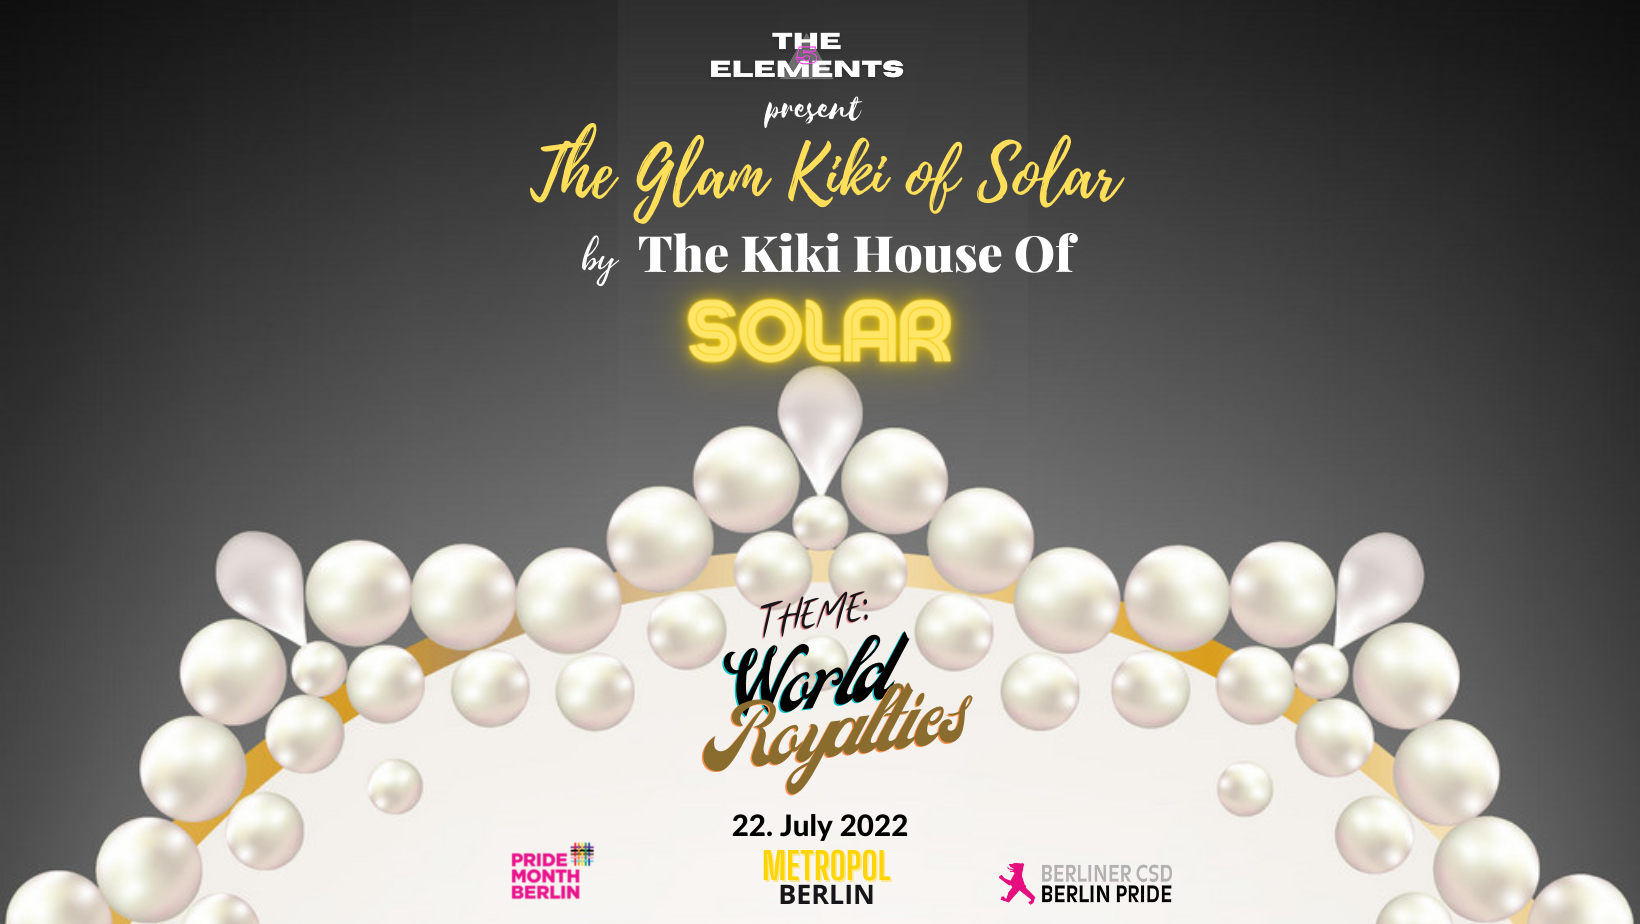 The Glam Kiki of Solar by the Kiki House of Solar